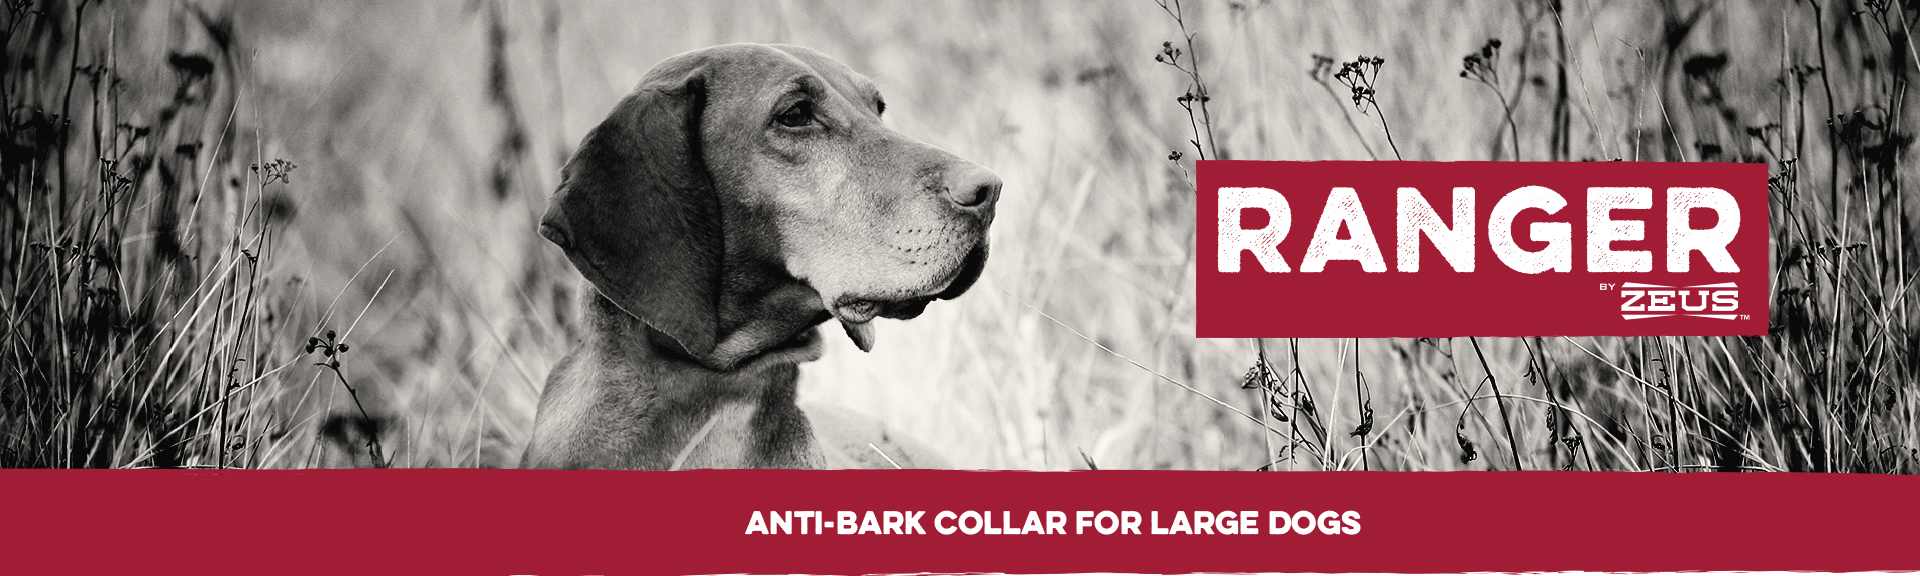 Zeus Ranger Anti-Bark Collar for Large Dogs